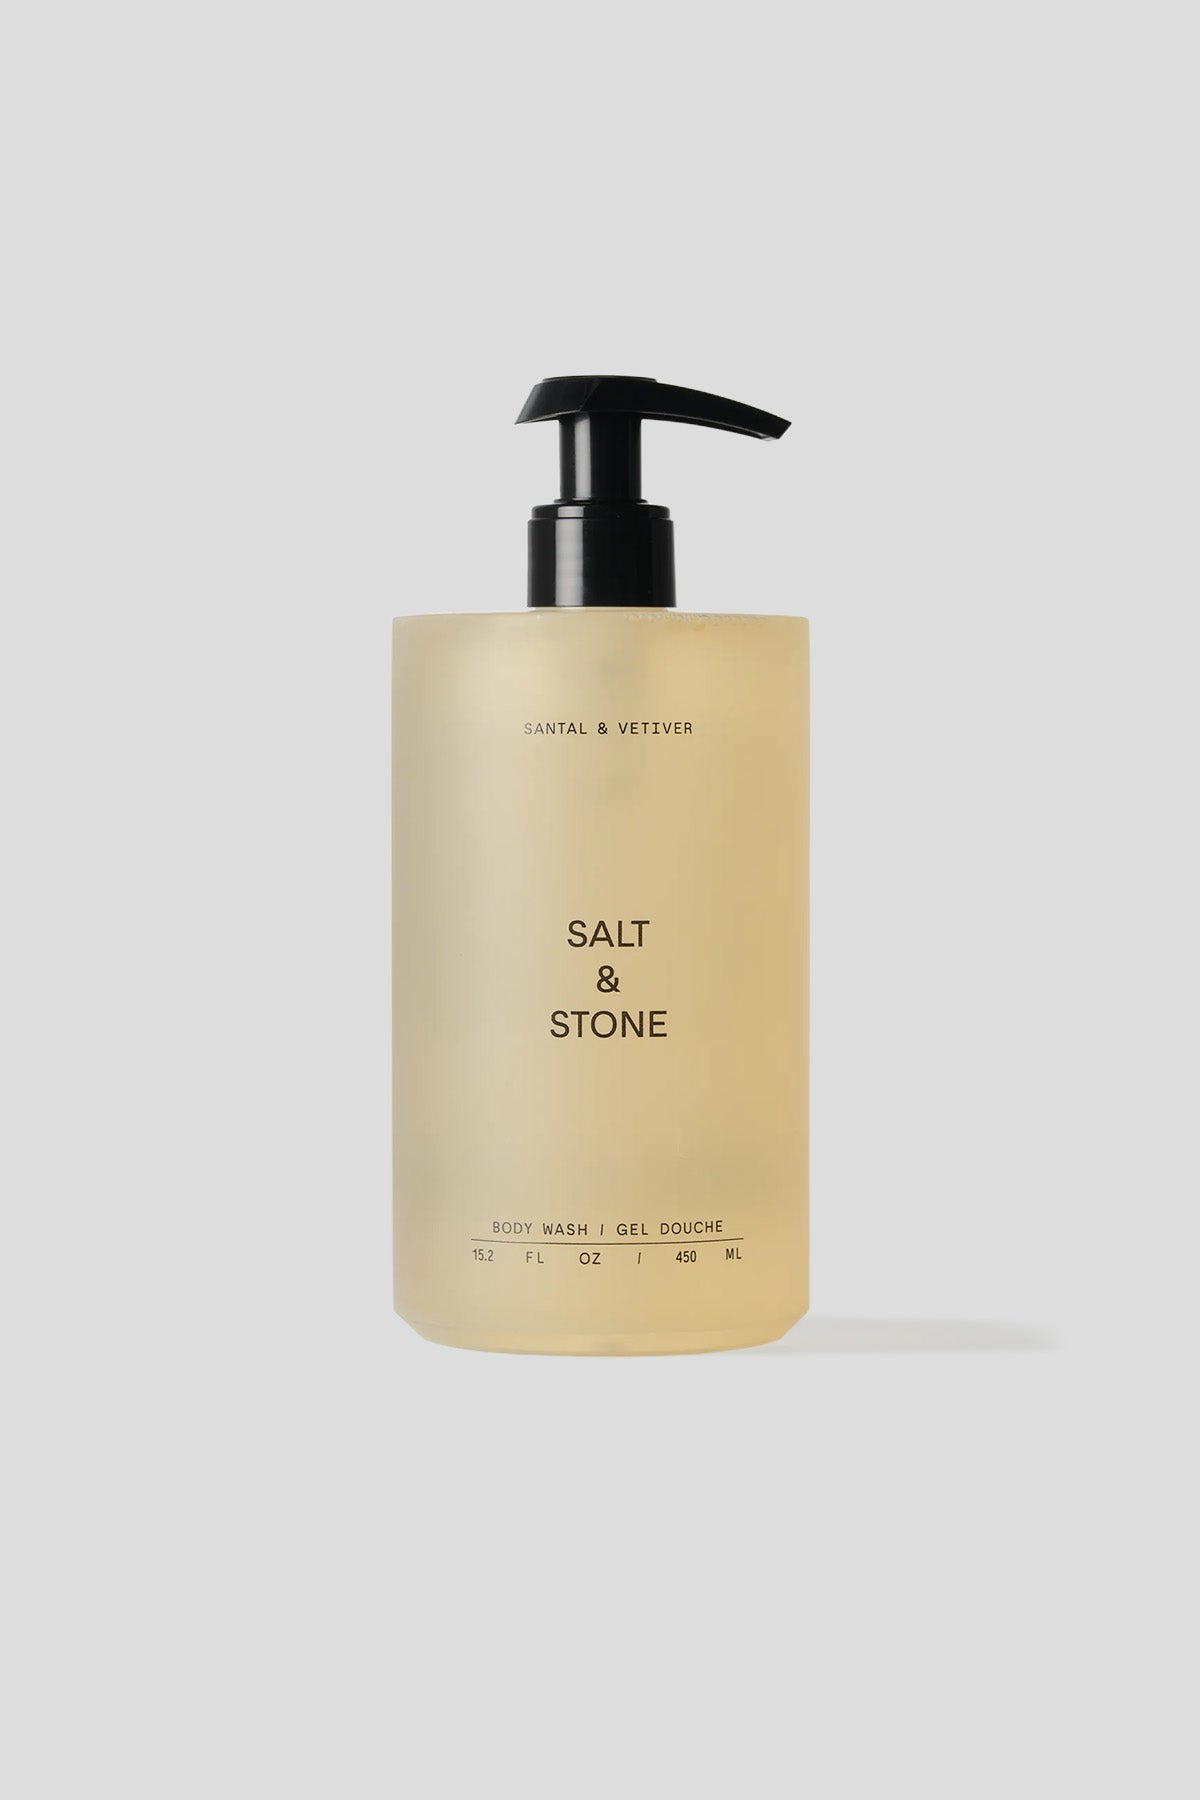 salt & stone - SANDALWOOD AND VETIVER SHOWER GEL  - LE LABO STORE